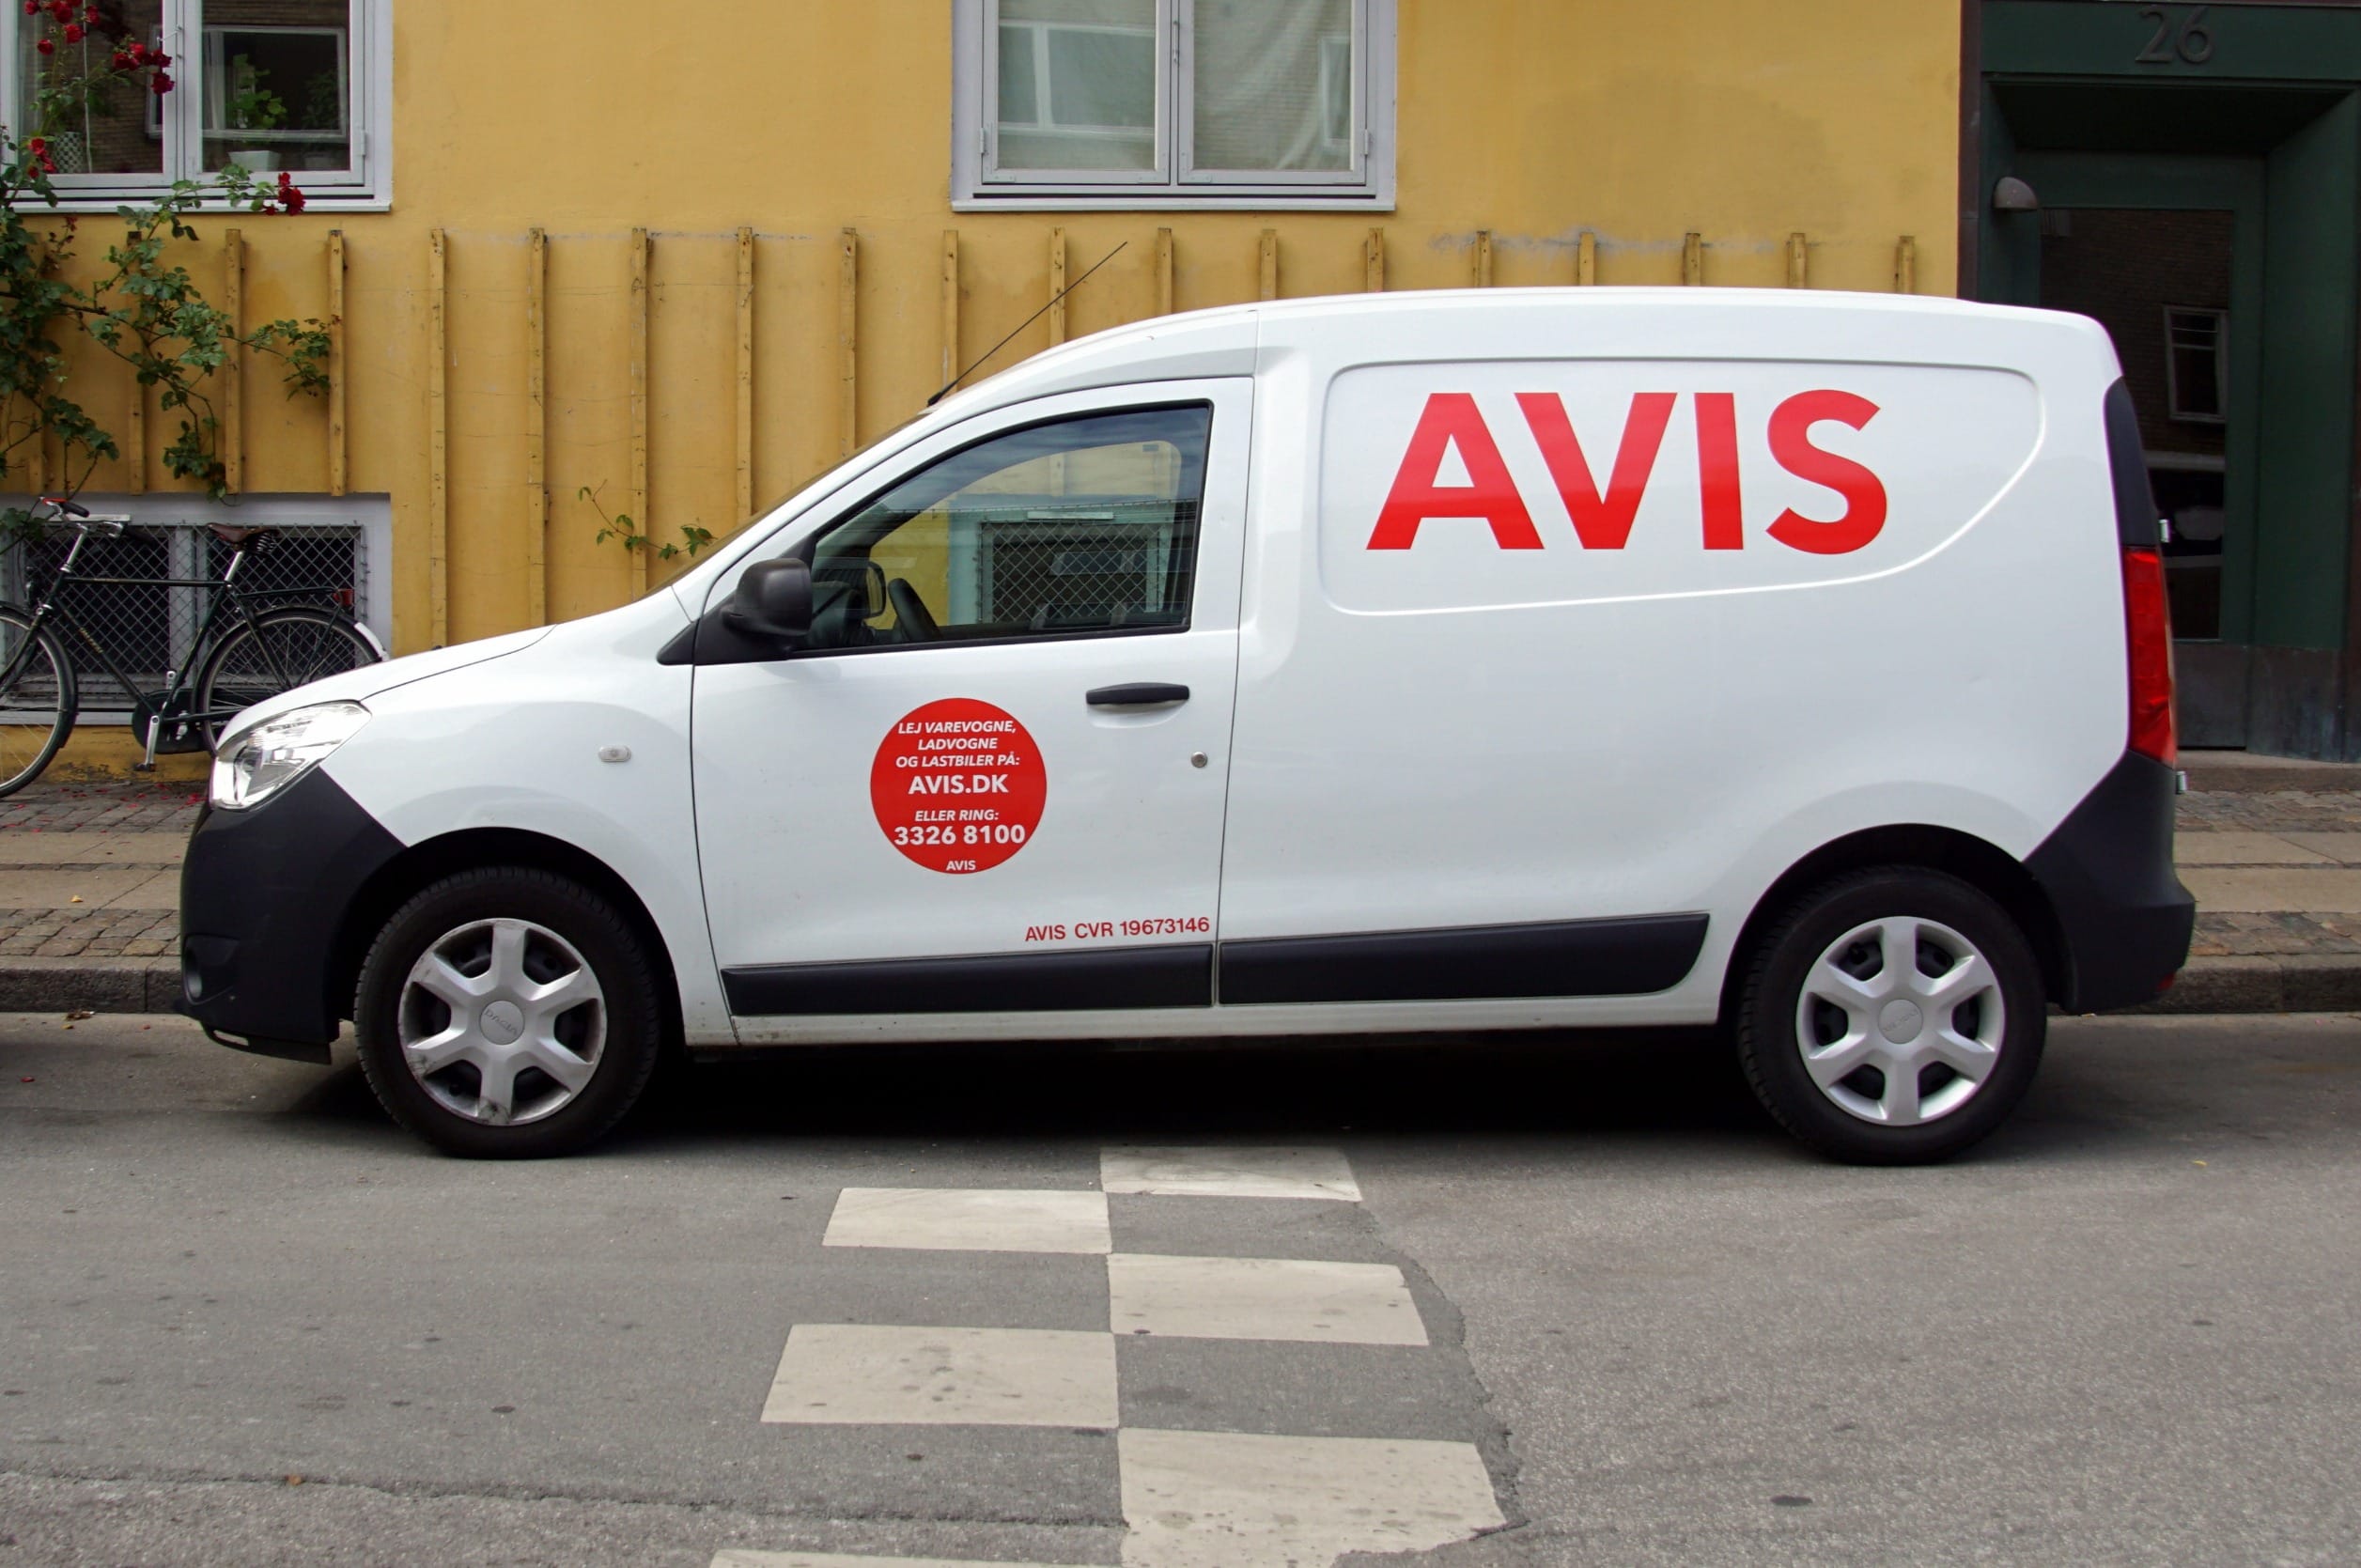 Белая арендованная машина AVIS припаркована на обочине дороги в Копенгагене